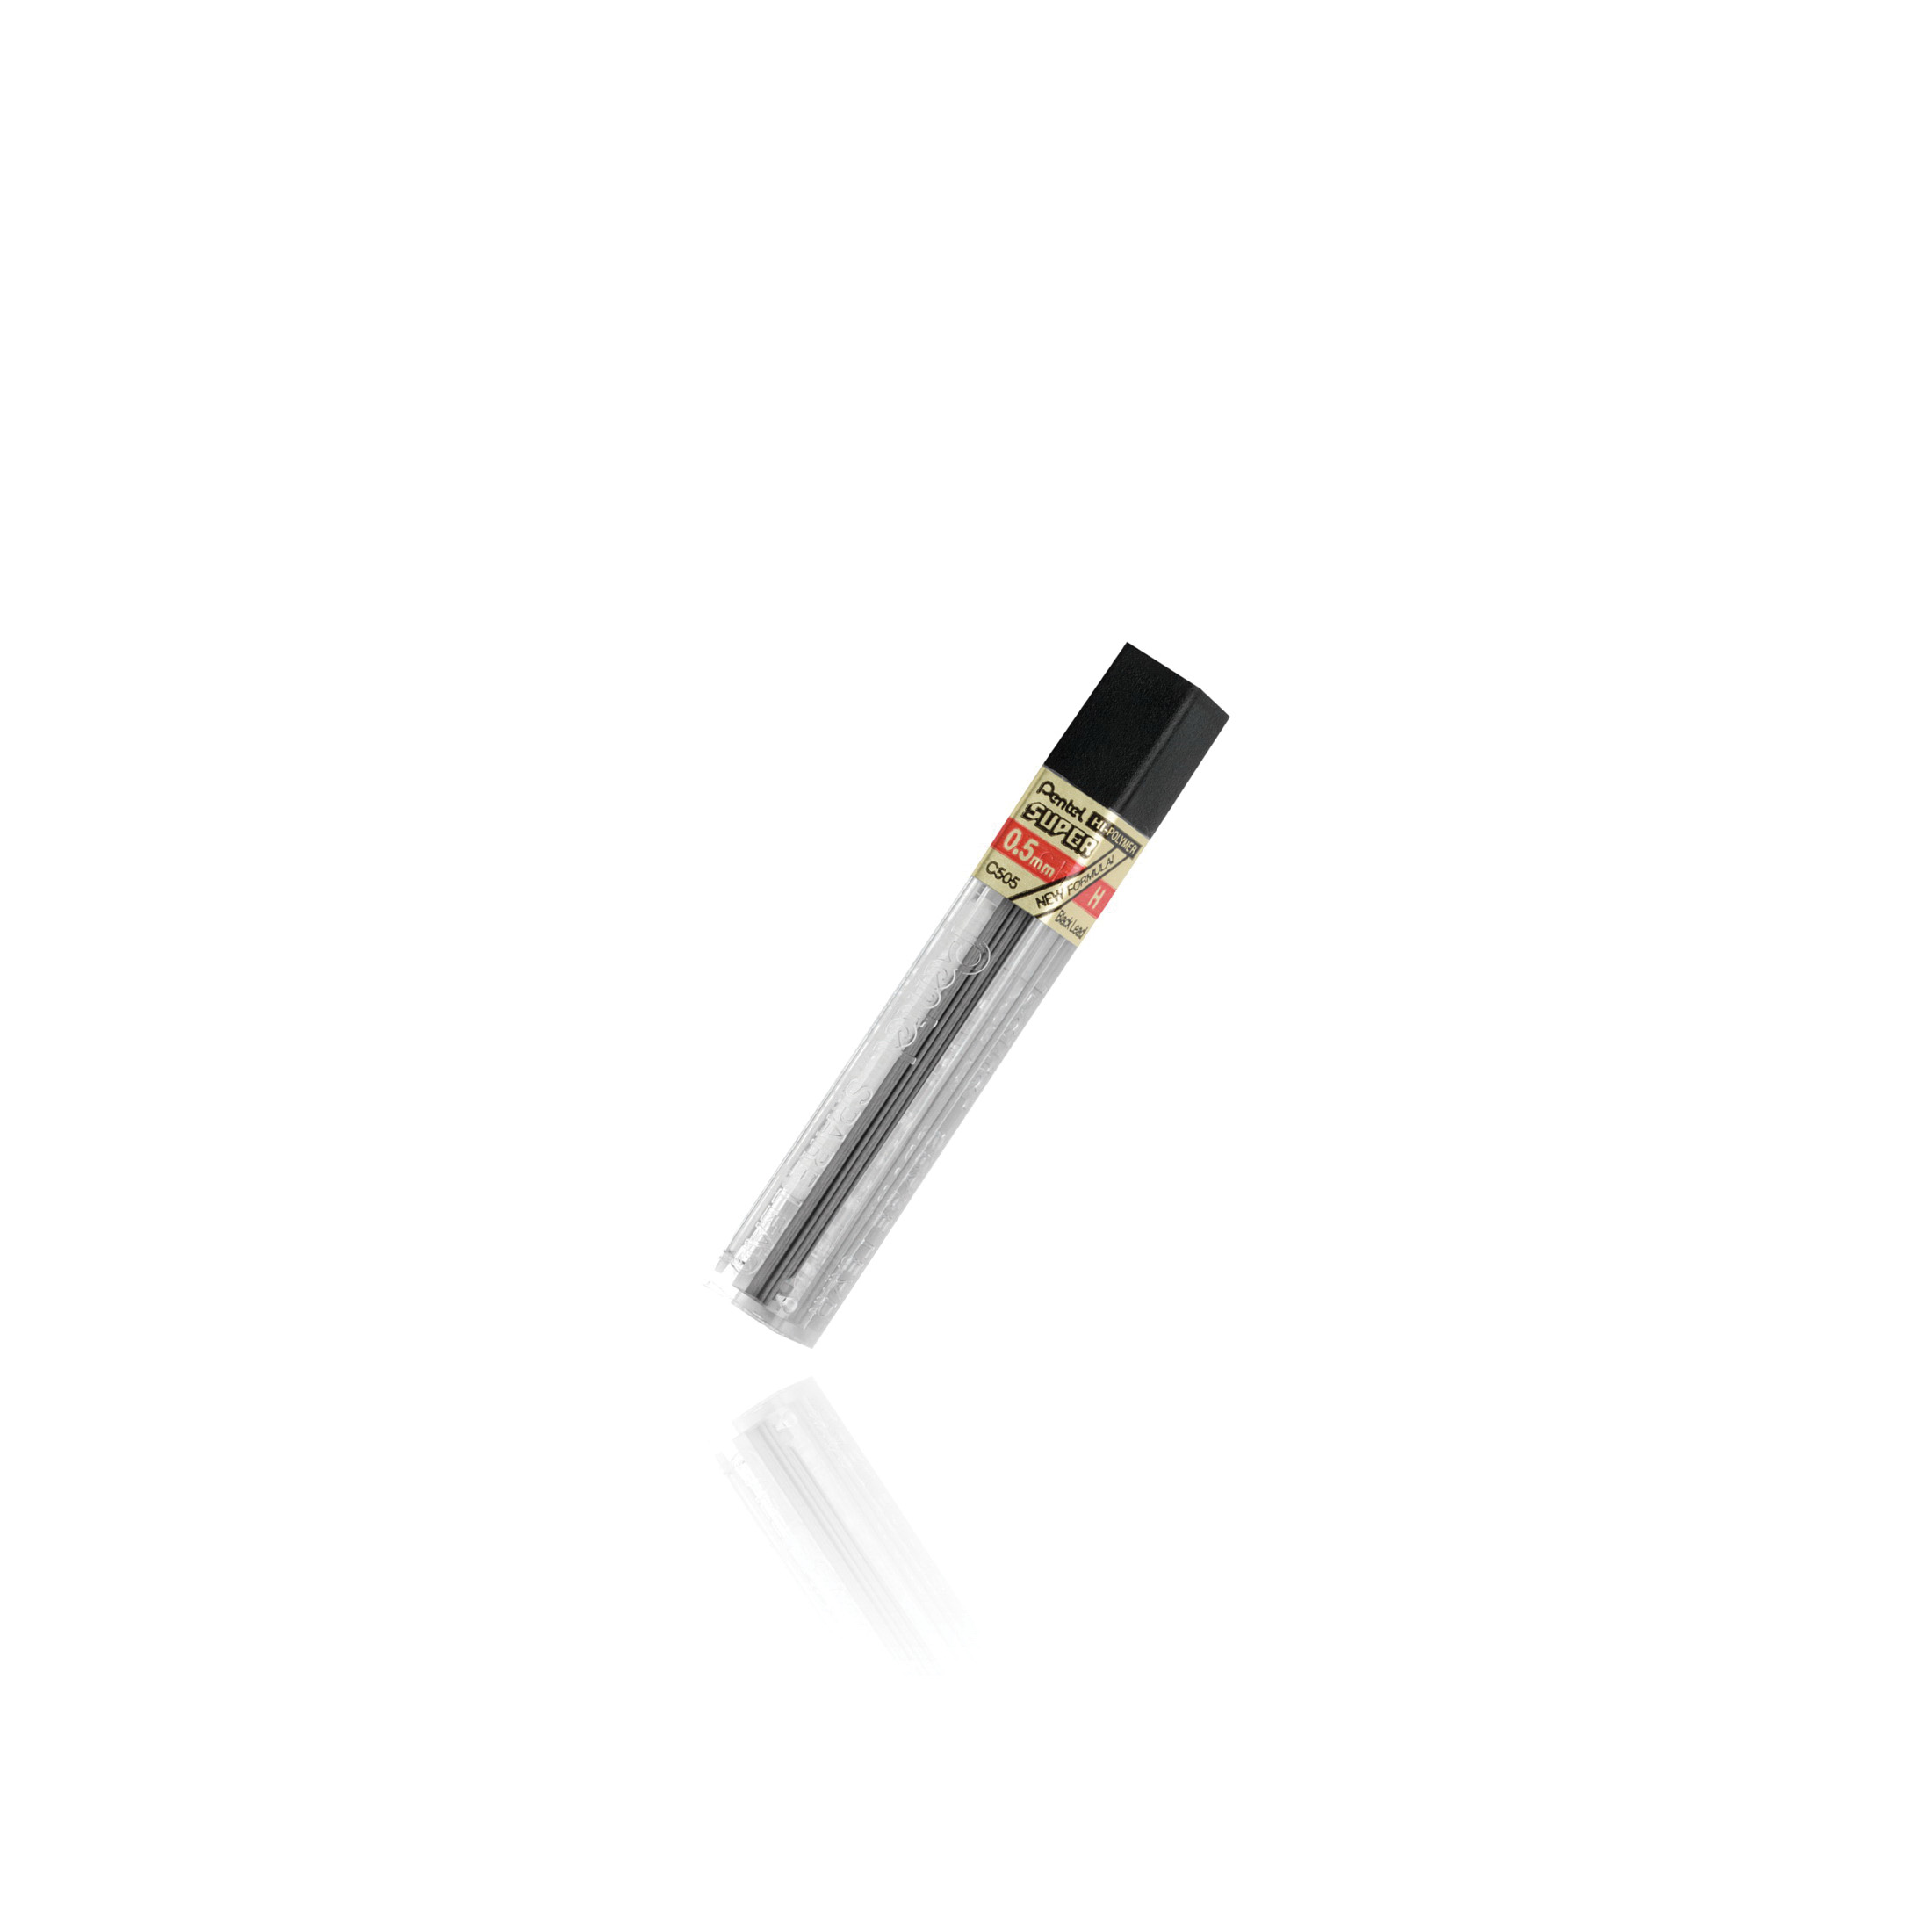 Pentel C505-H Pencil Lead, 0.5 mm Lead, Black, H Lead - 1